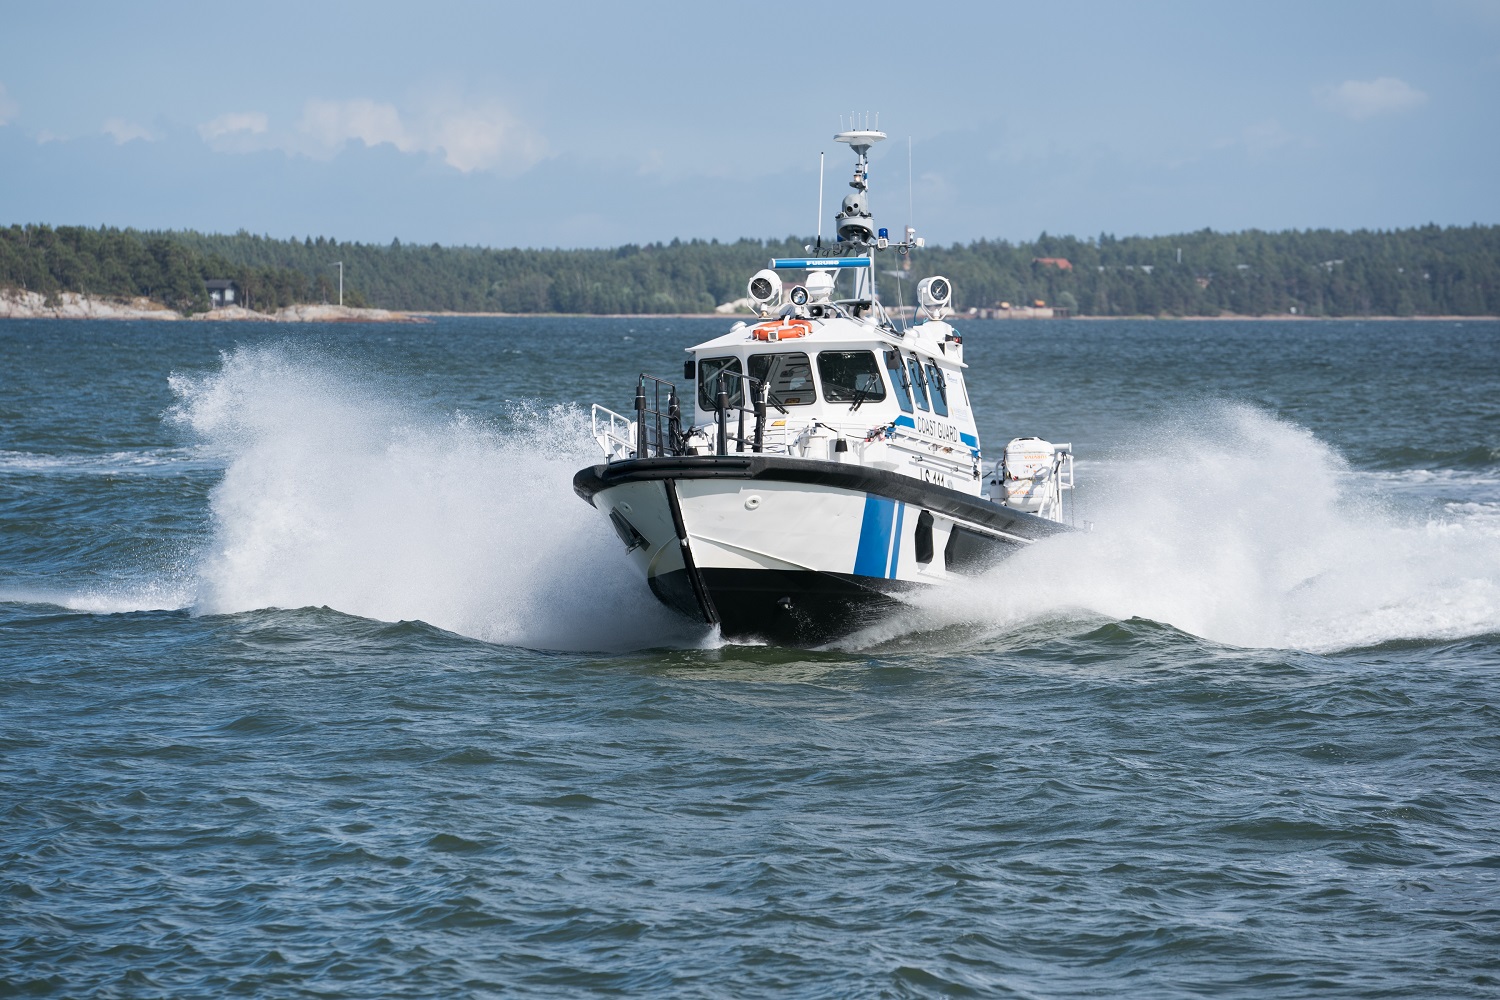 A Coast Guard patrol boat in rough water.